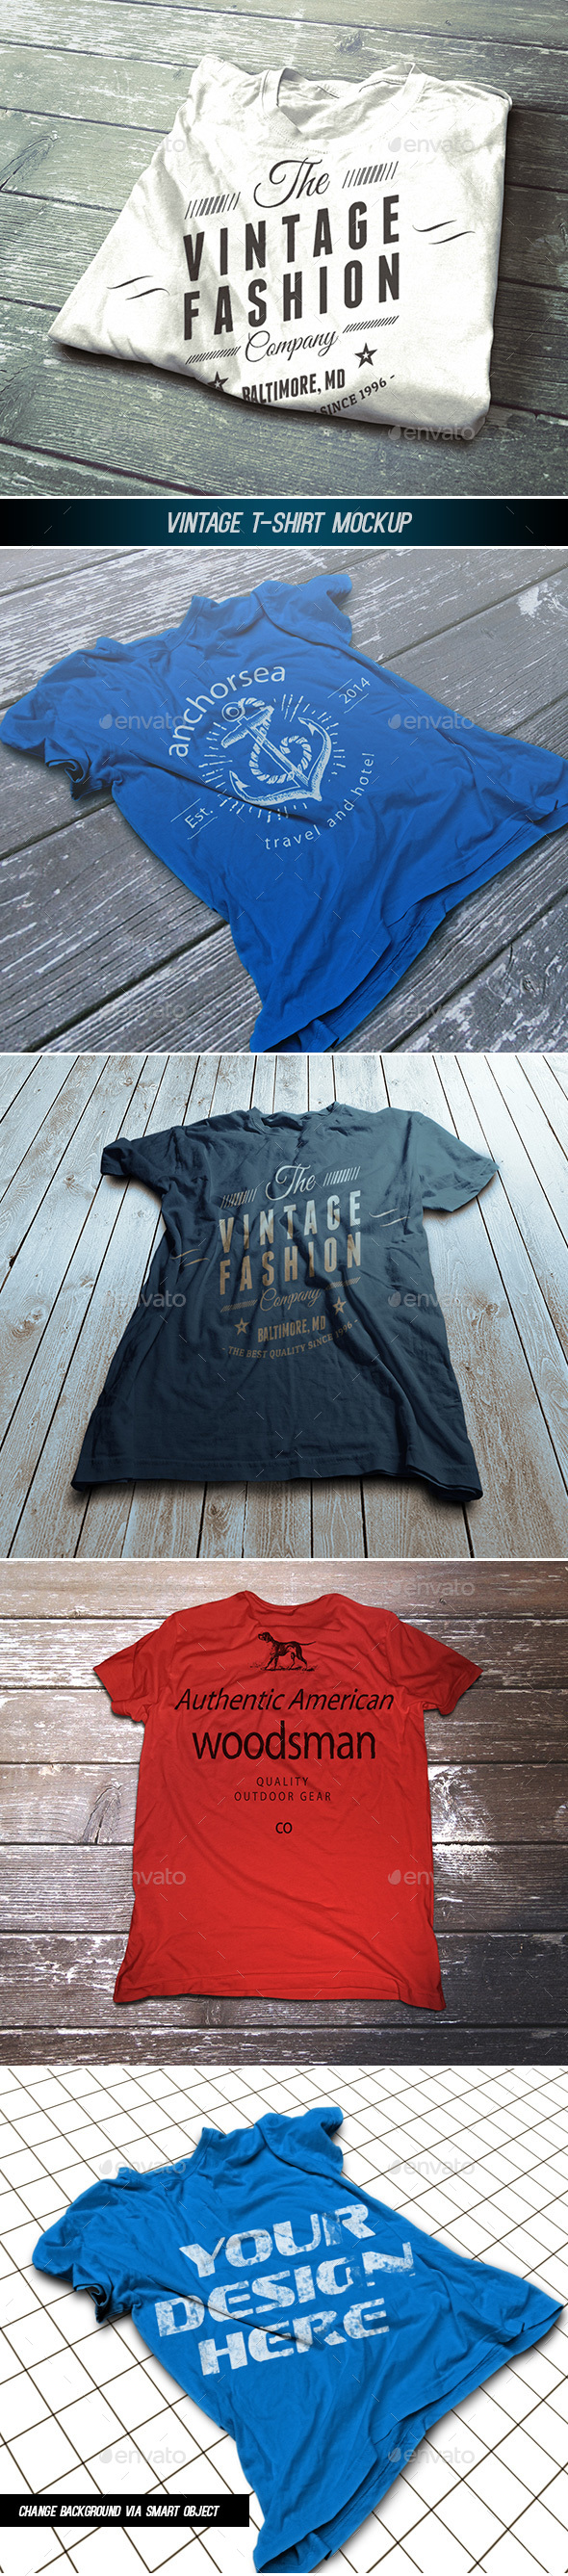 Download Vintage T-Shirt Mockup by dgas99 | GraphicRiver